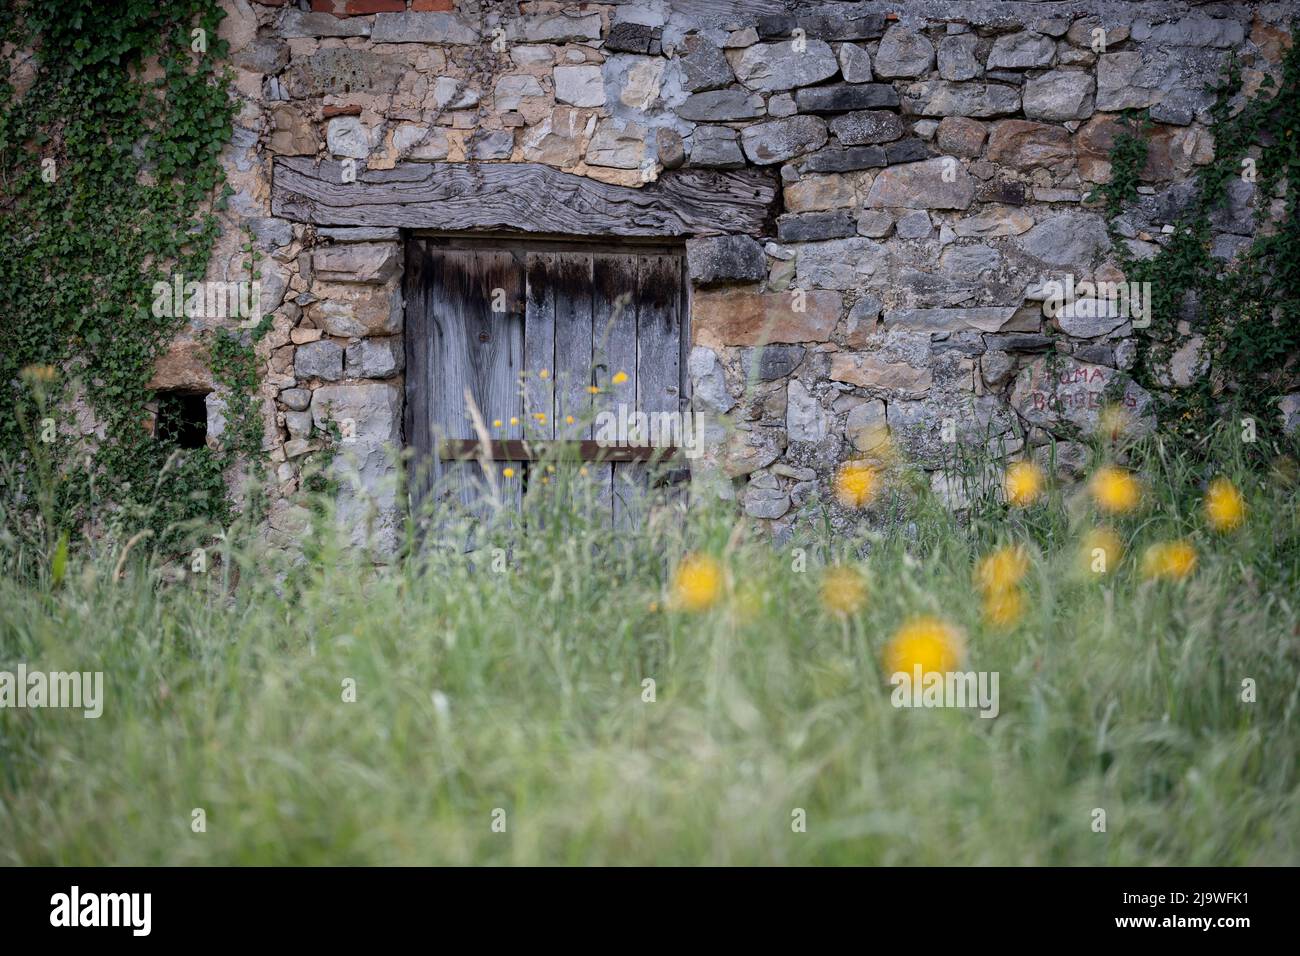 A derelict farming property in a rural Spanish village, on 15th May 2022, in Mesta de Con, Picos Mountains, Asturias, Spain. Stock Photo